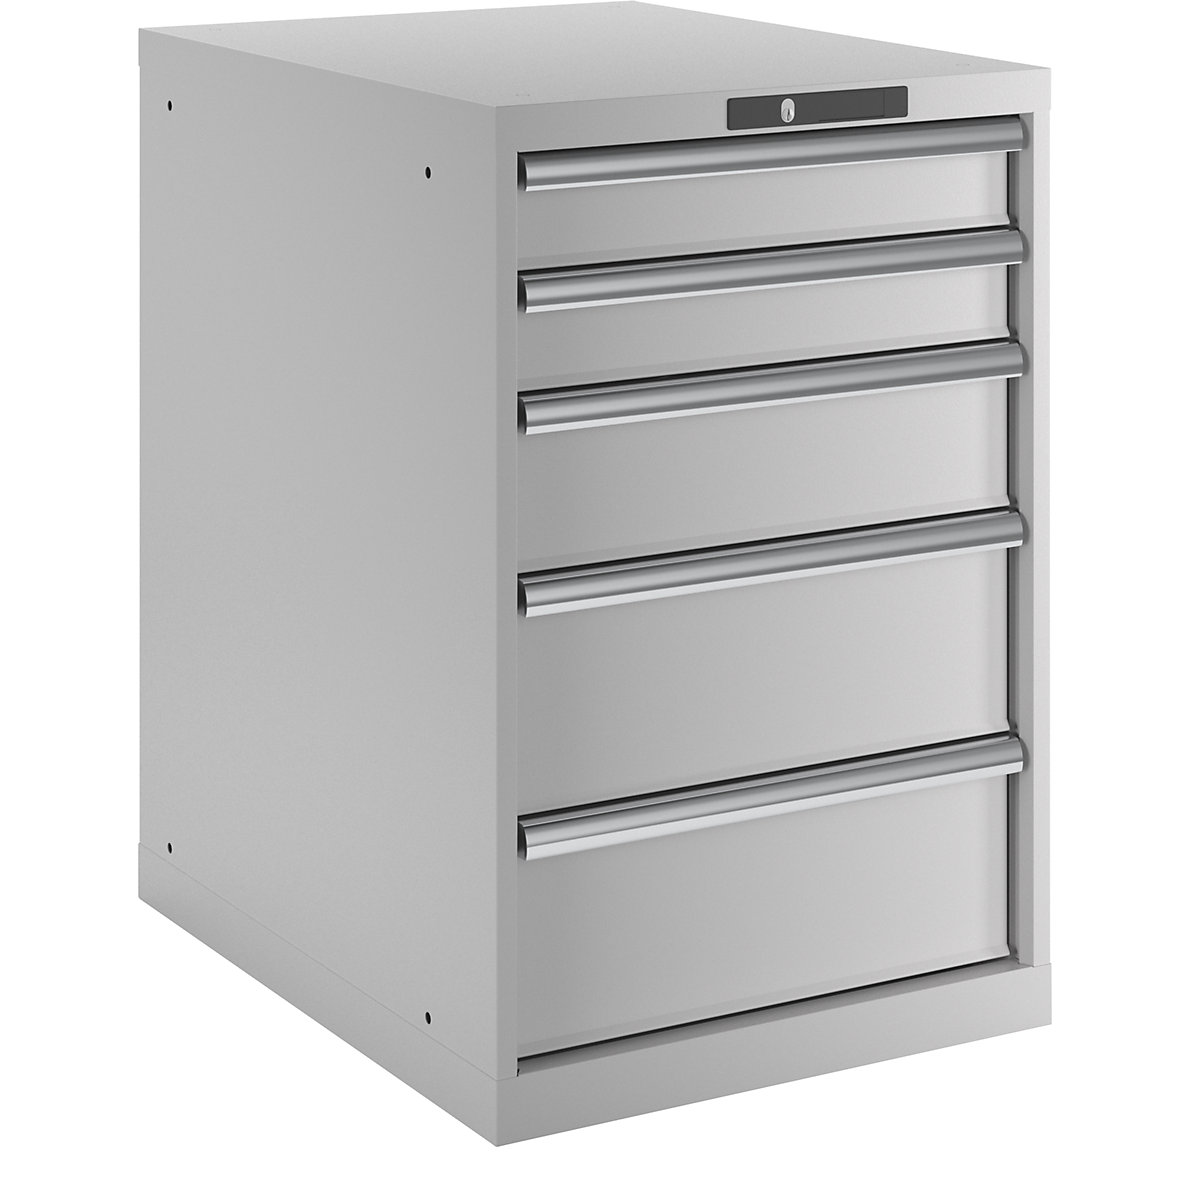 Drawer cupboard, 5 drawers – LISTA, WxDxH 564 x 724 x 850 mm, light grey-3